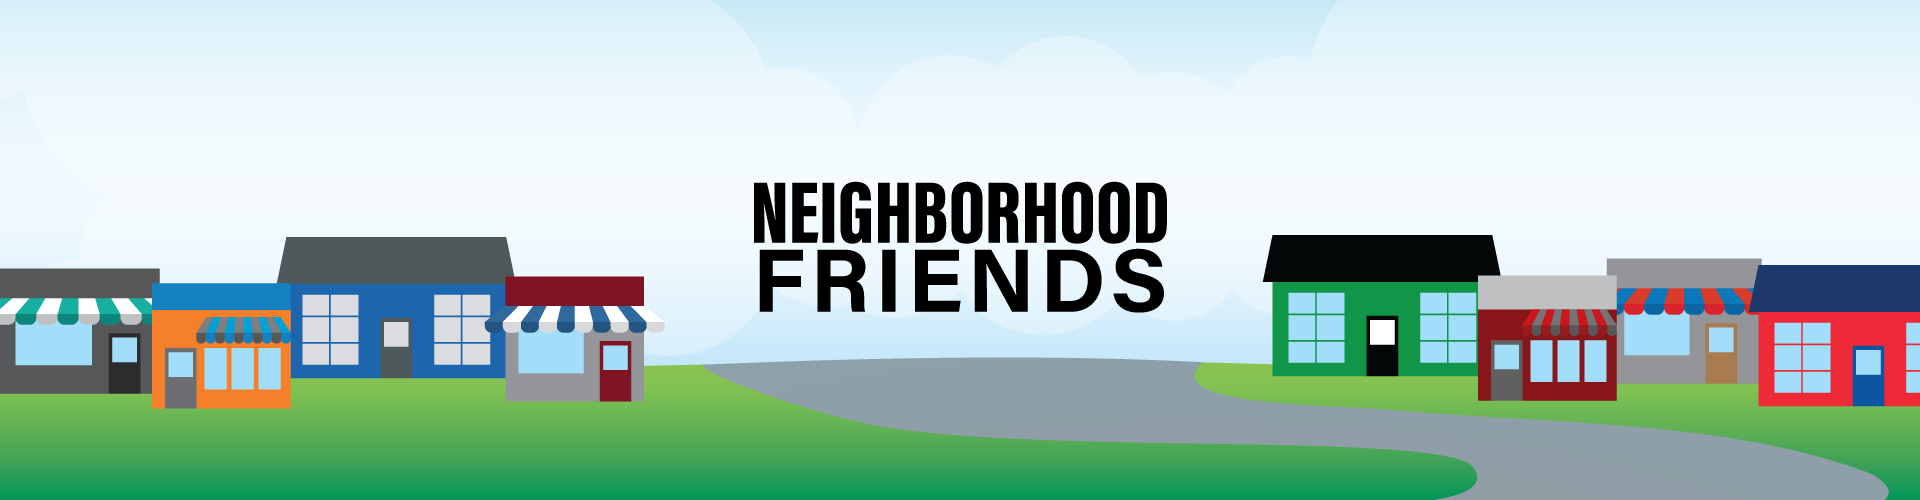 Neighborhood Friends Hero Image